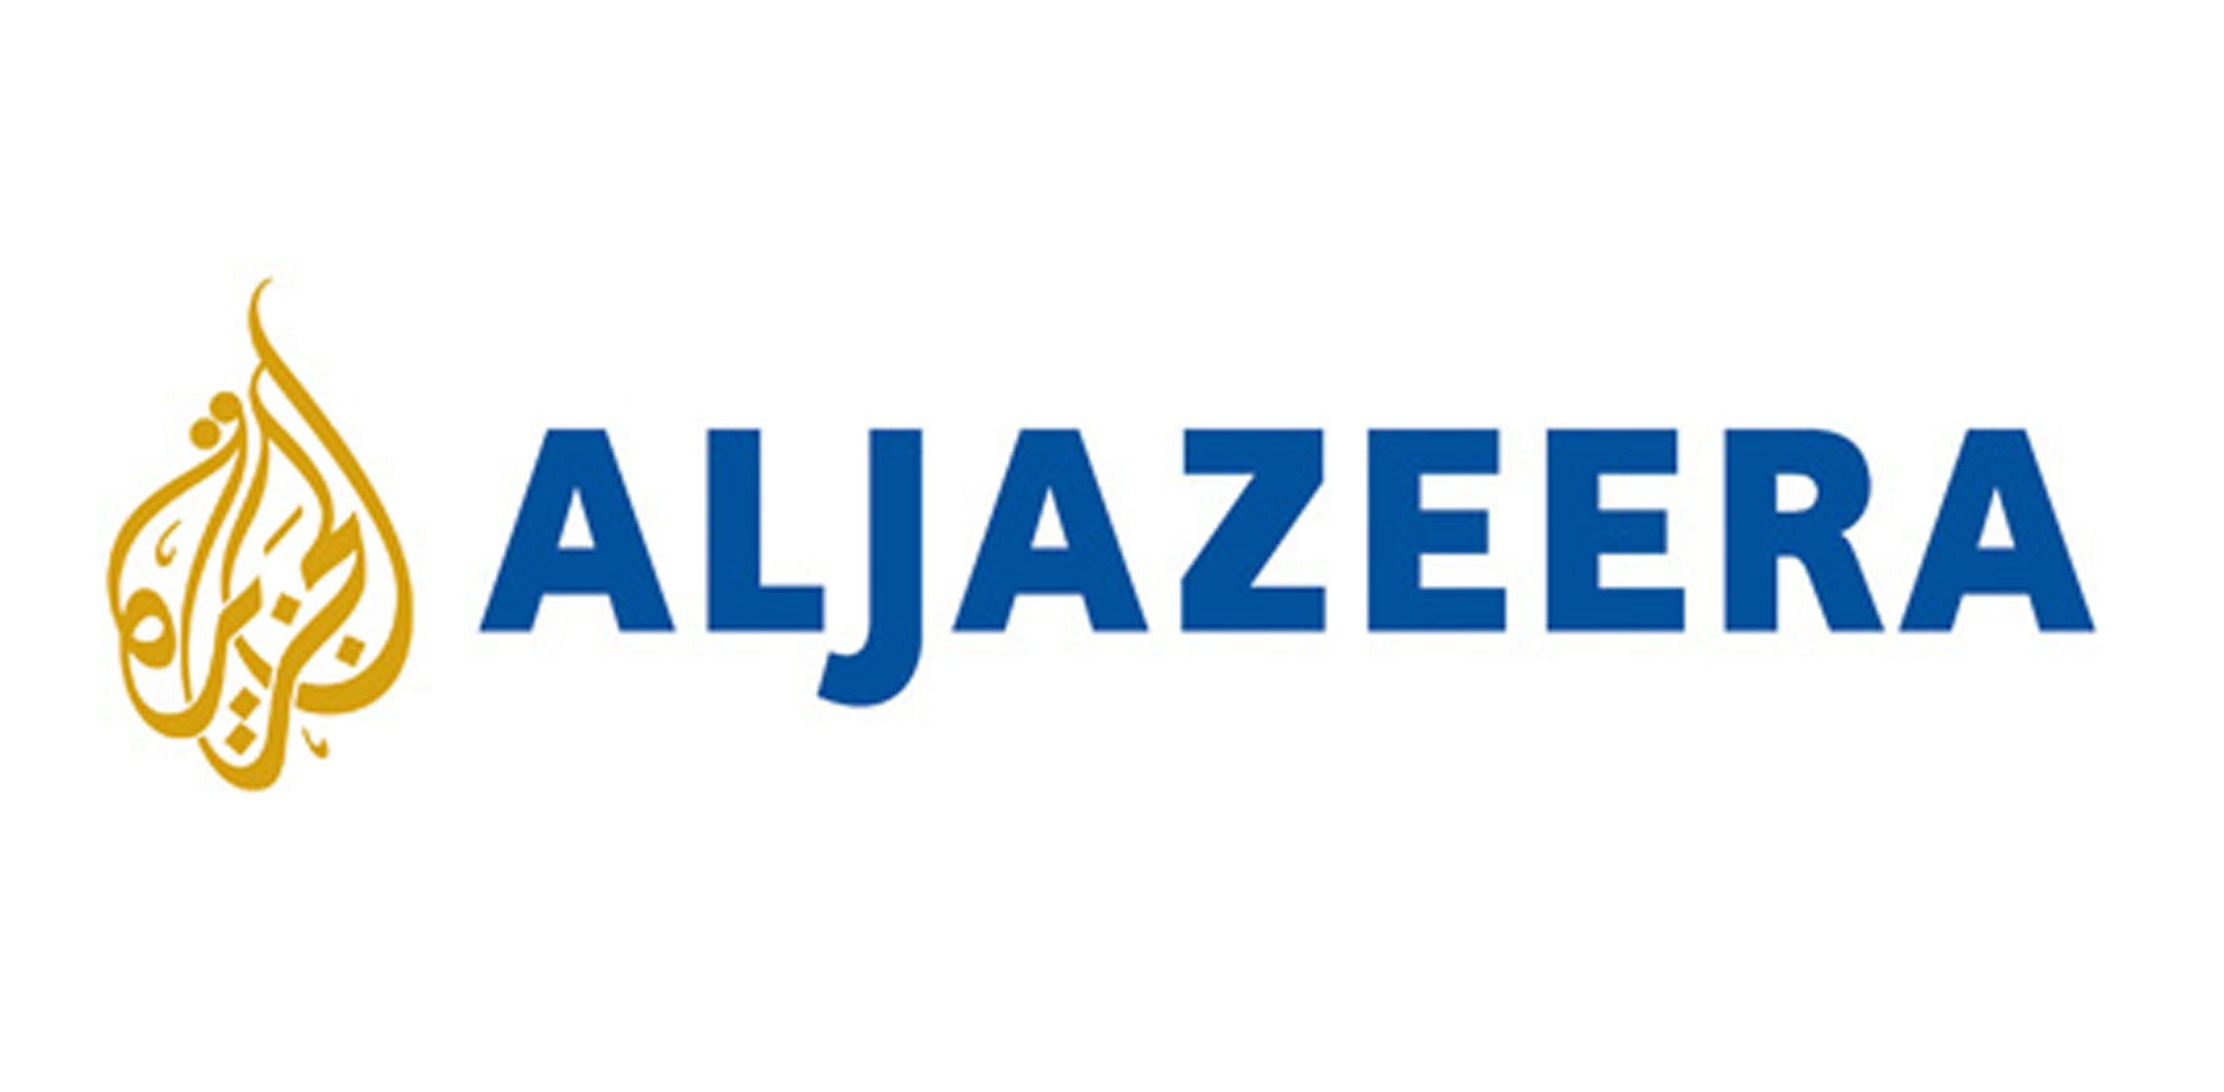 Qatar: Saudi led coalition lists the closure of Al Jazeera among conditions  to end crisis - IFJ